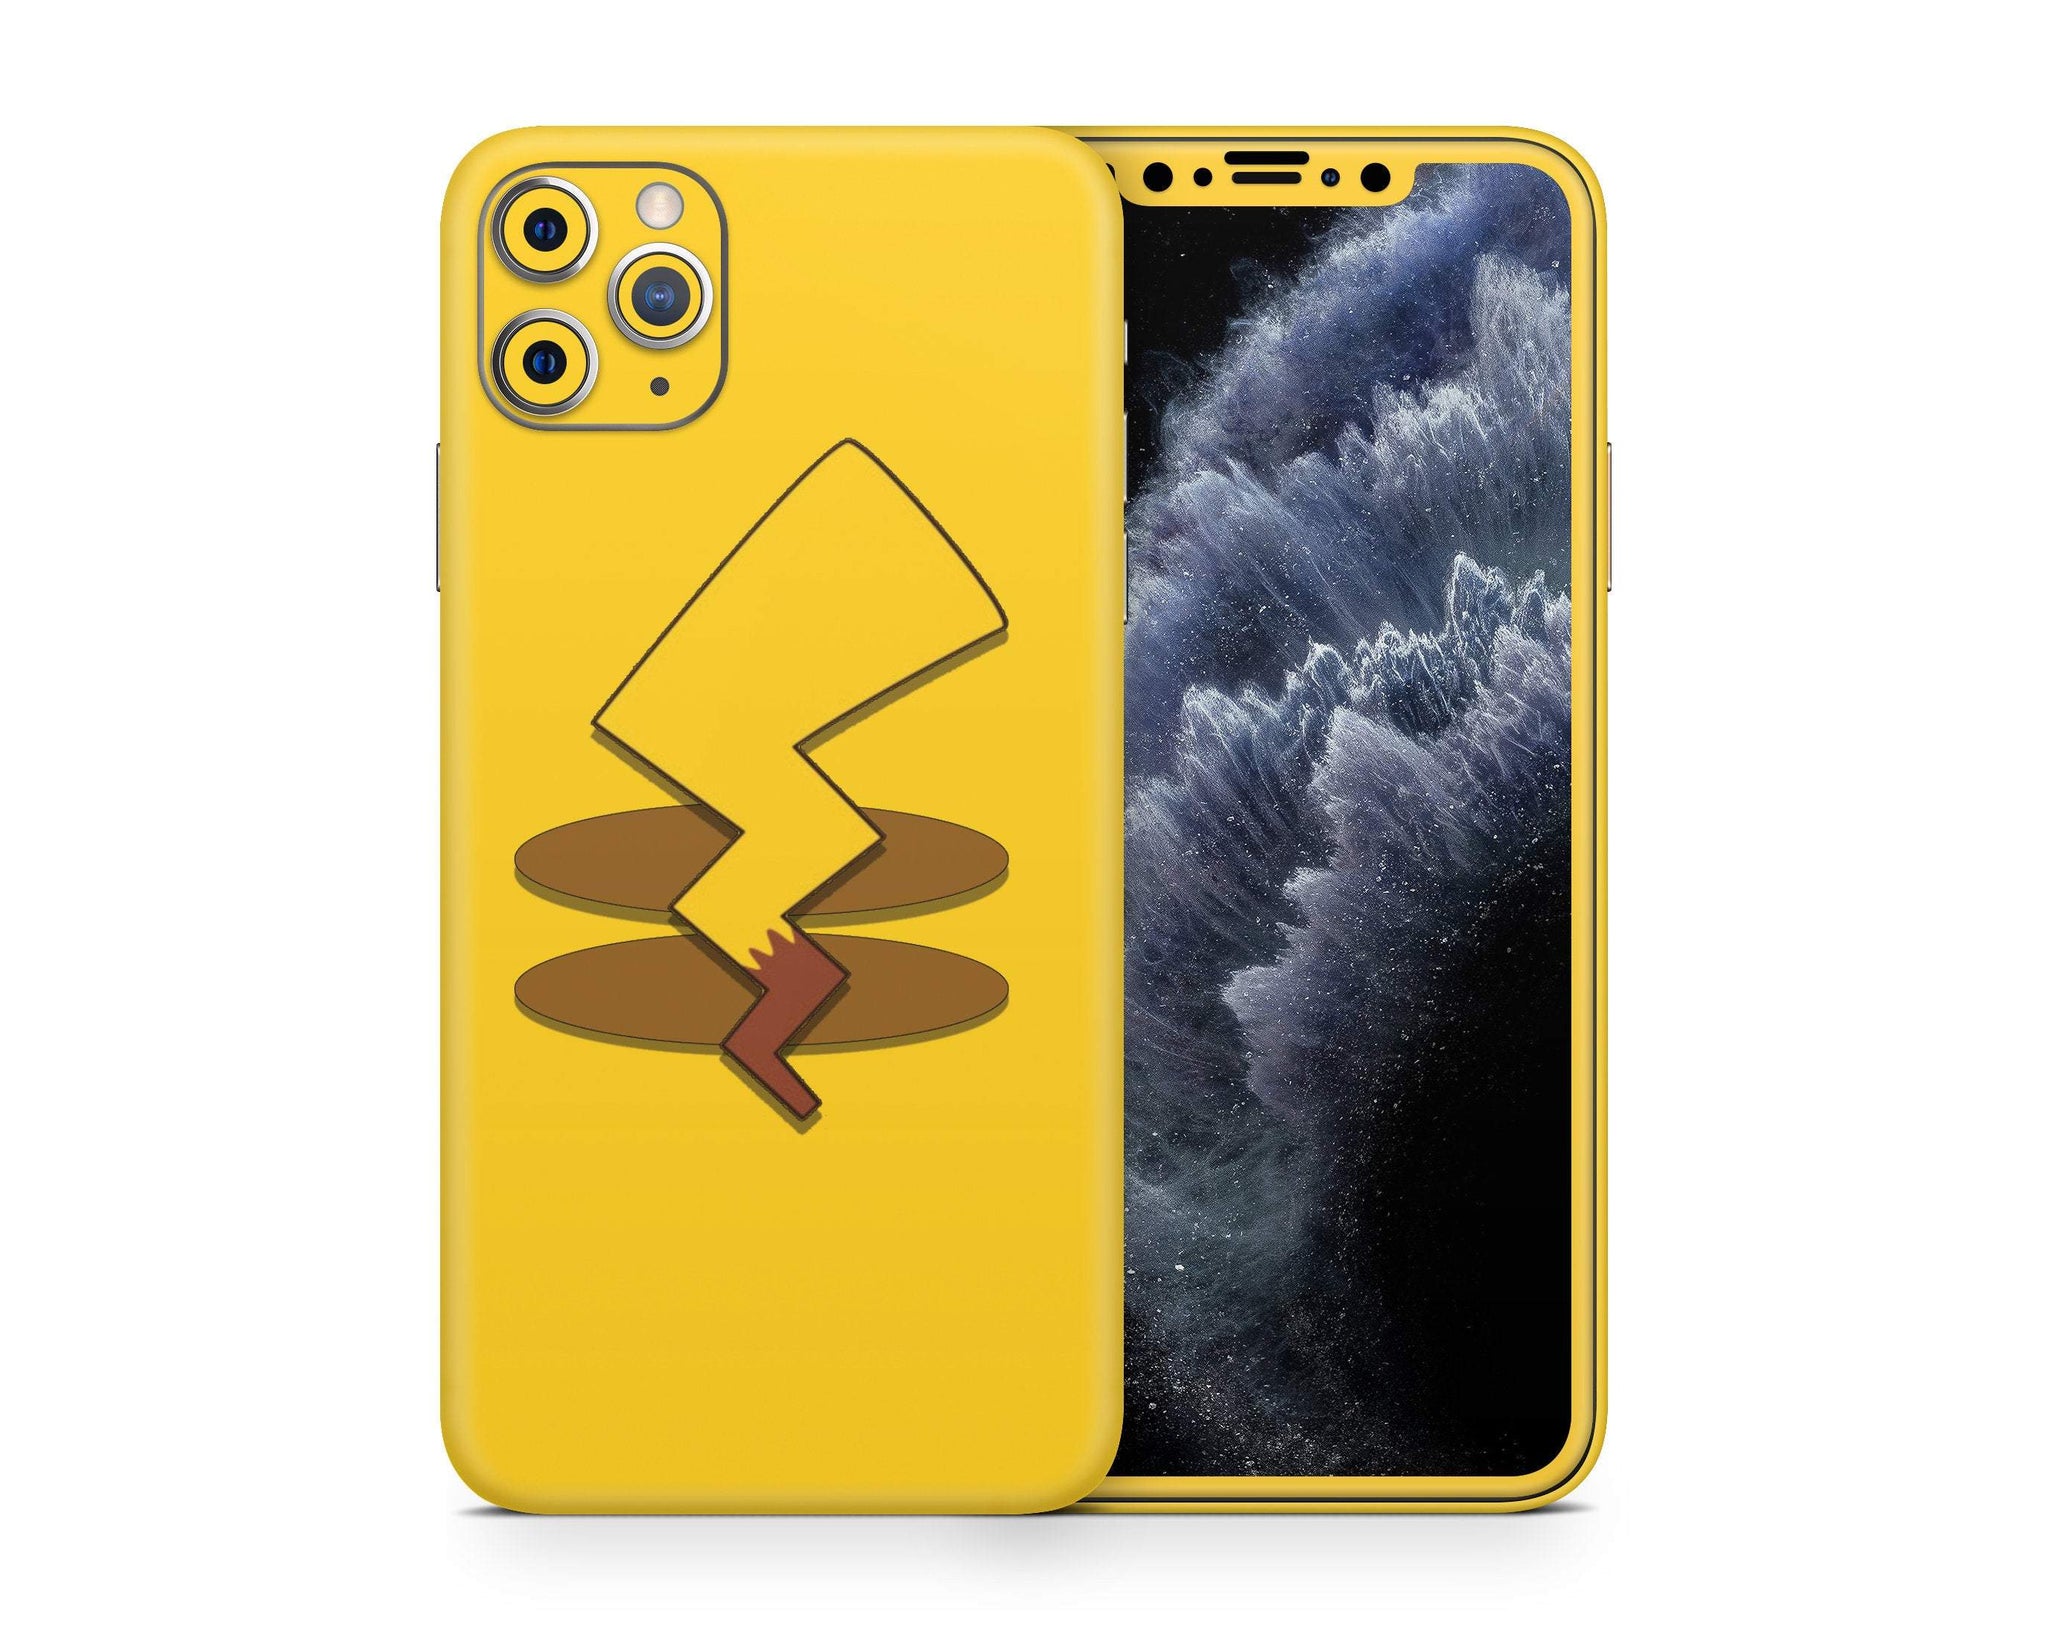 Pikachu Tail iPhone Skin